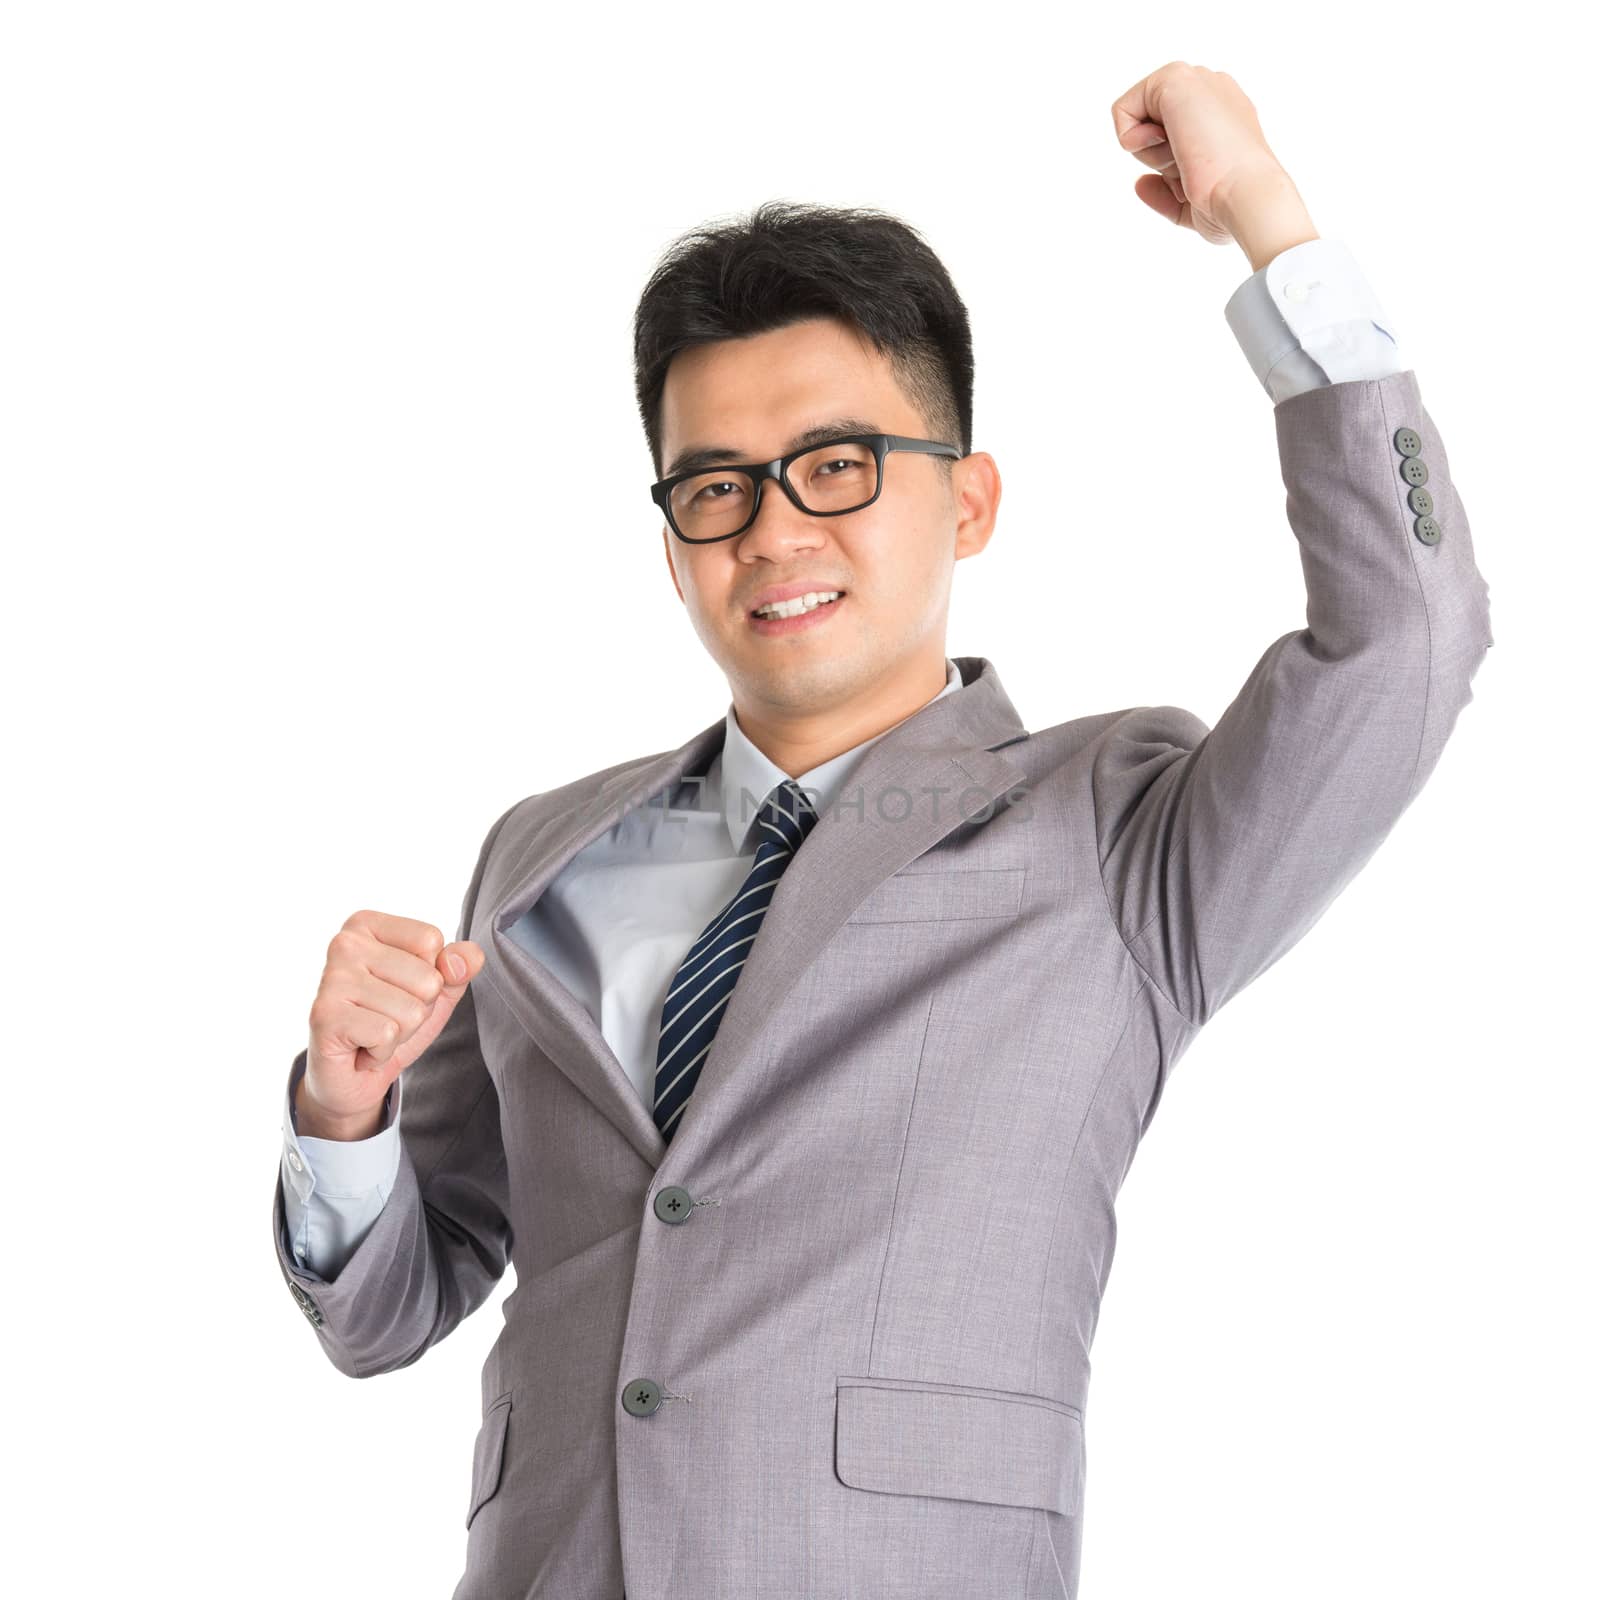 Portrait of Asian businessman celebrating success, isolated on white background.